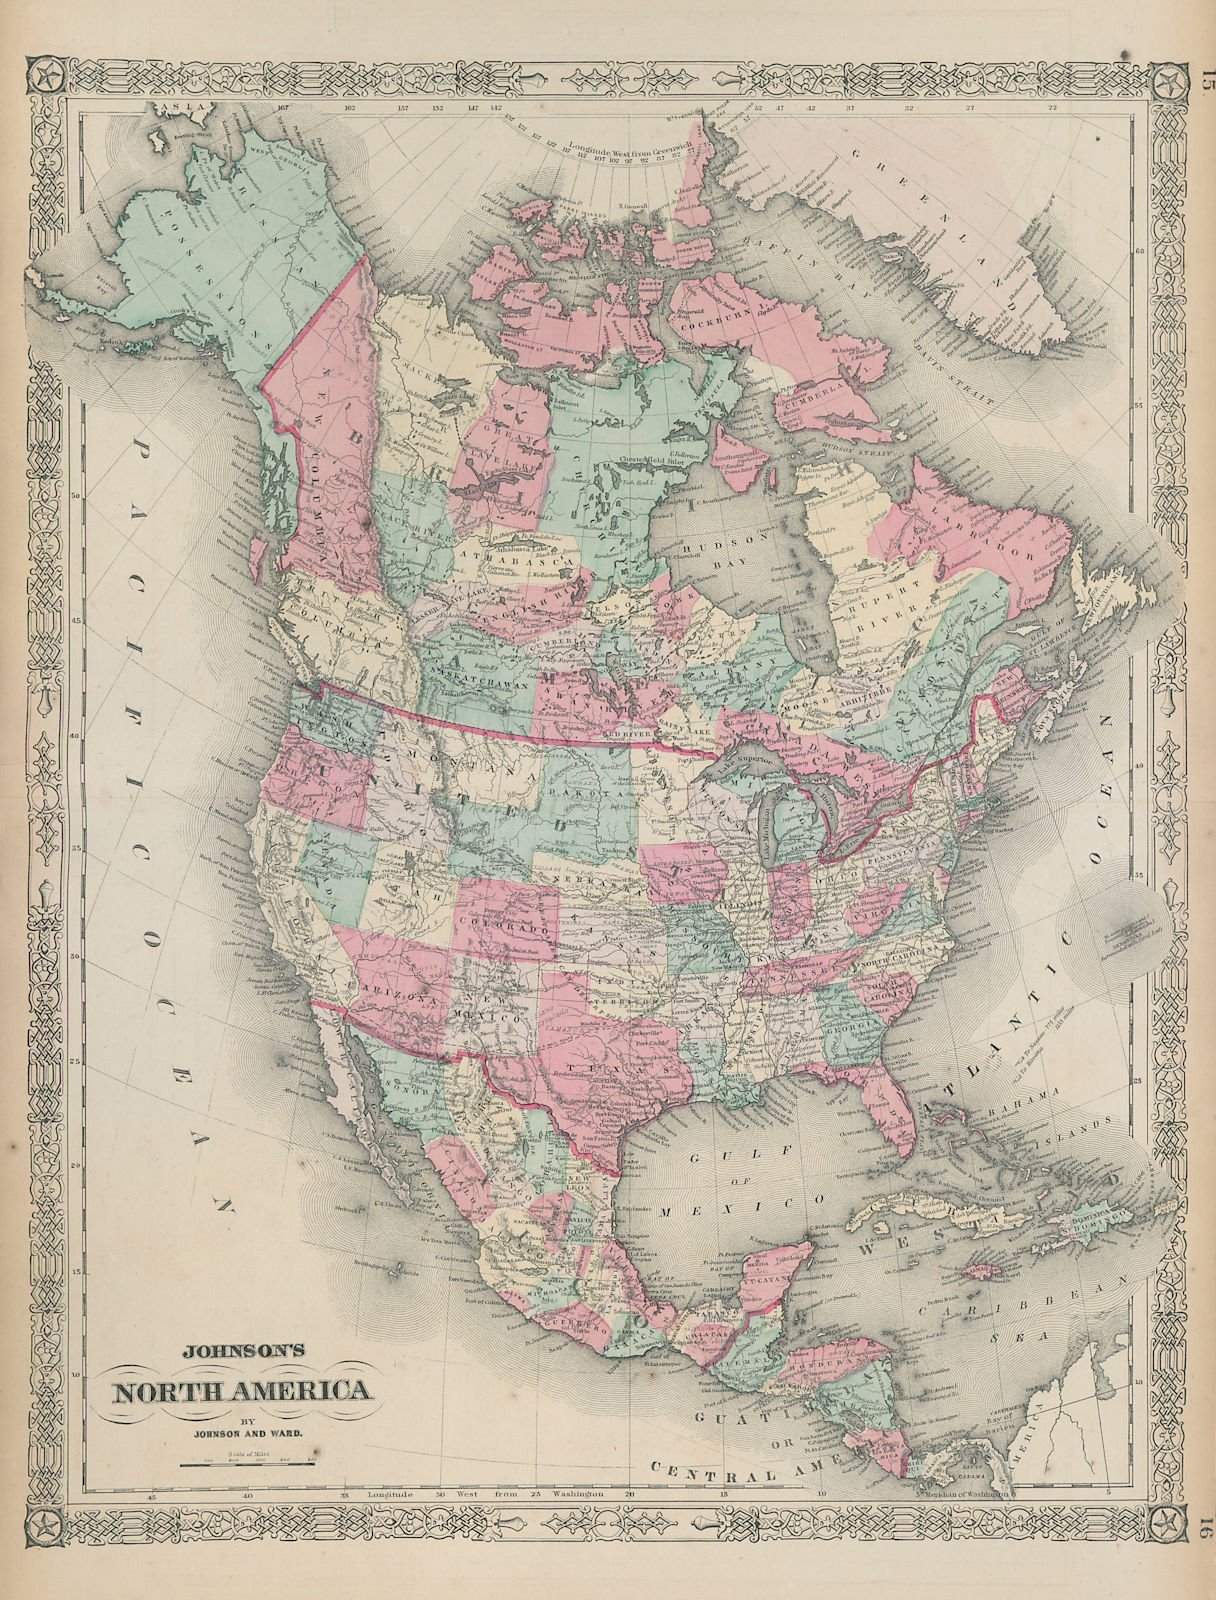 Associate Product Johnson's North America. Russian Alaska Wyoming within Dakota Territory 1865 map